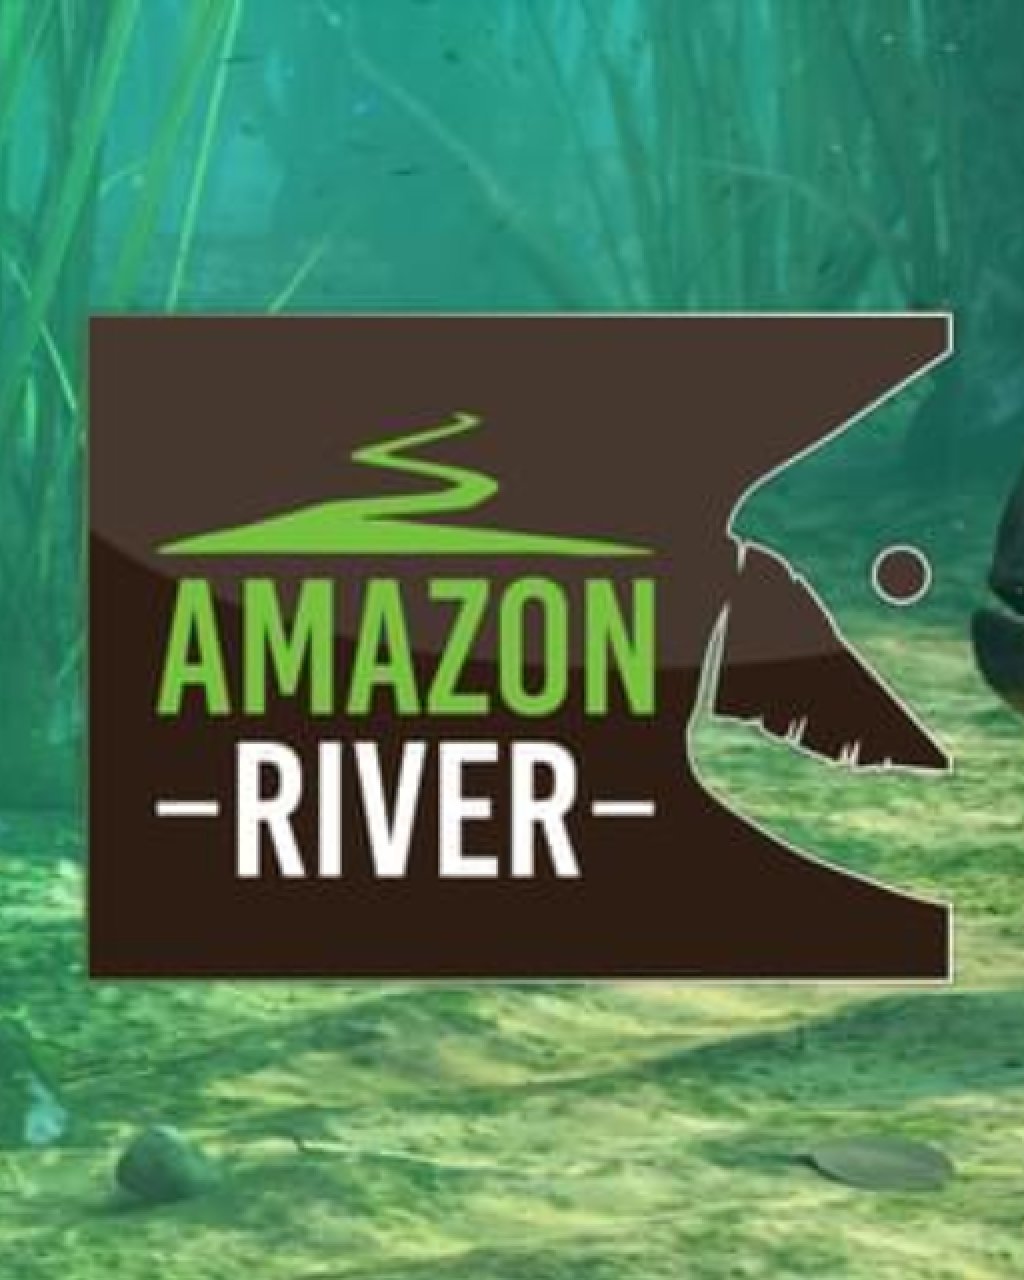 Ultimate Fishing Simulator Amazon River